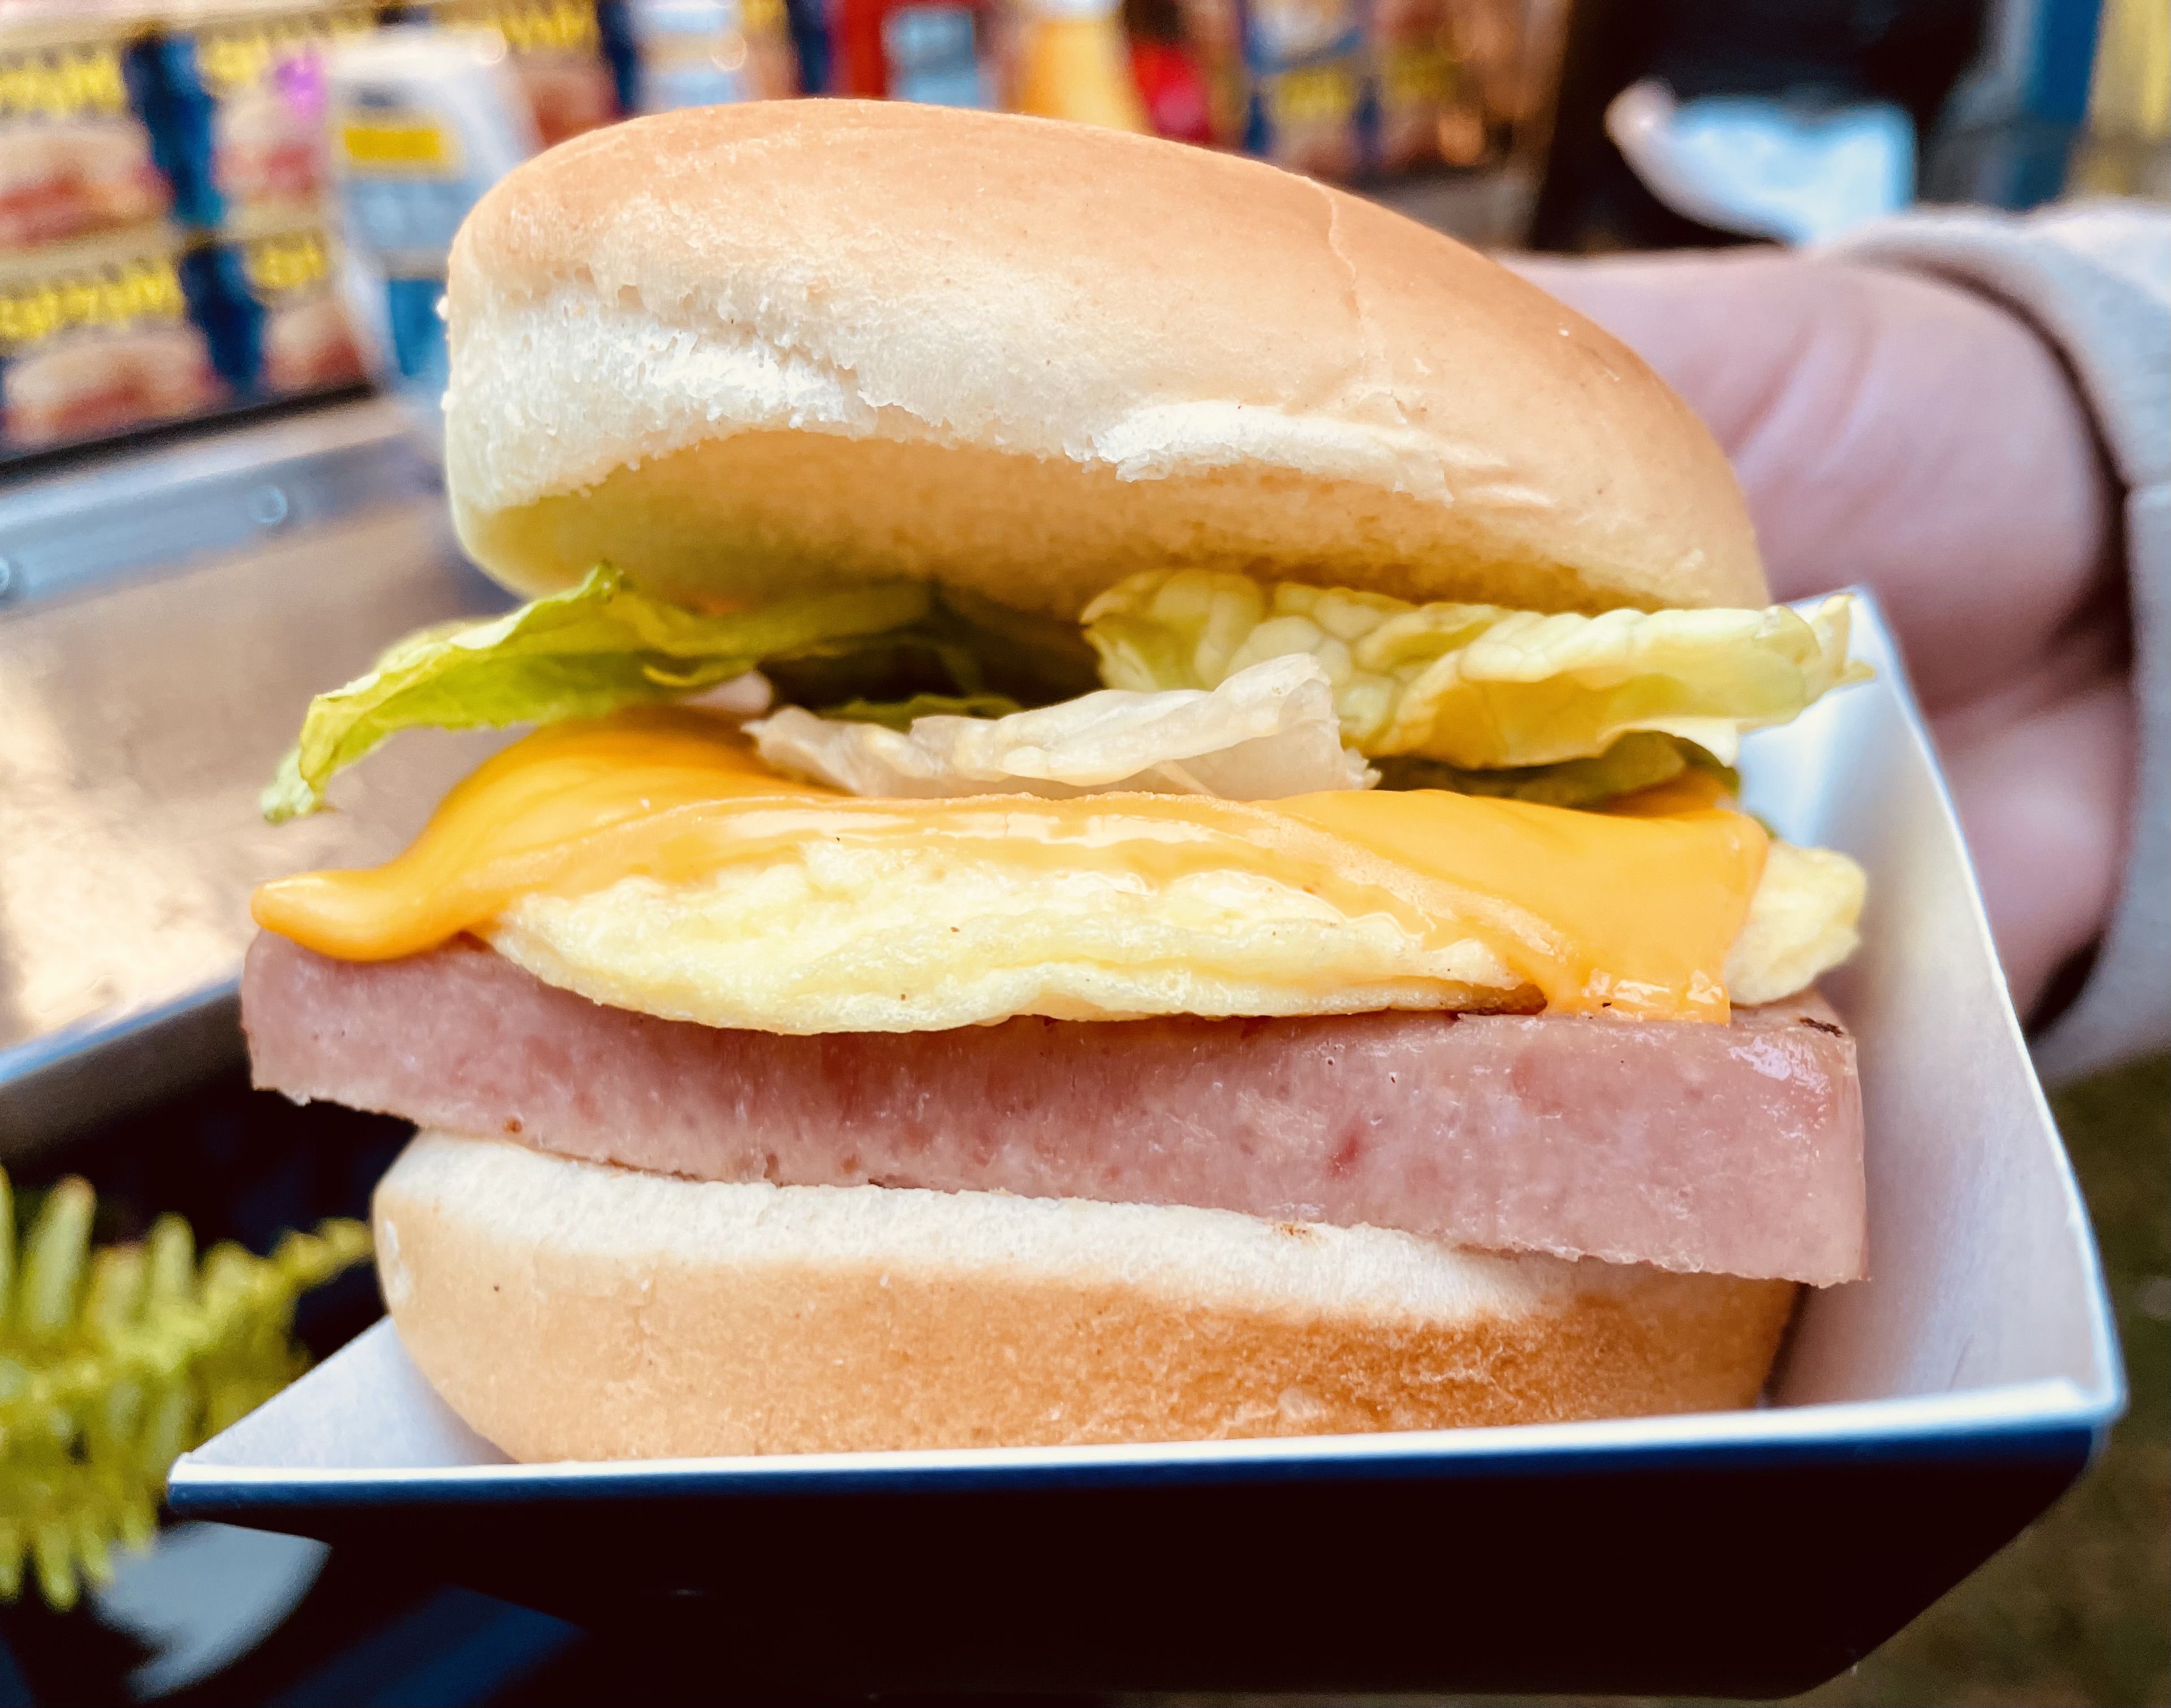 A photo of a Spam sandwich